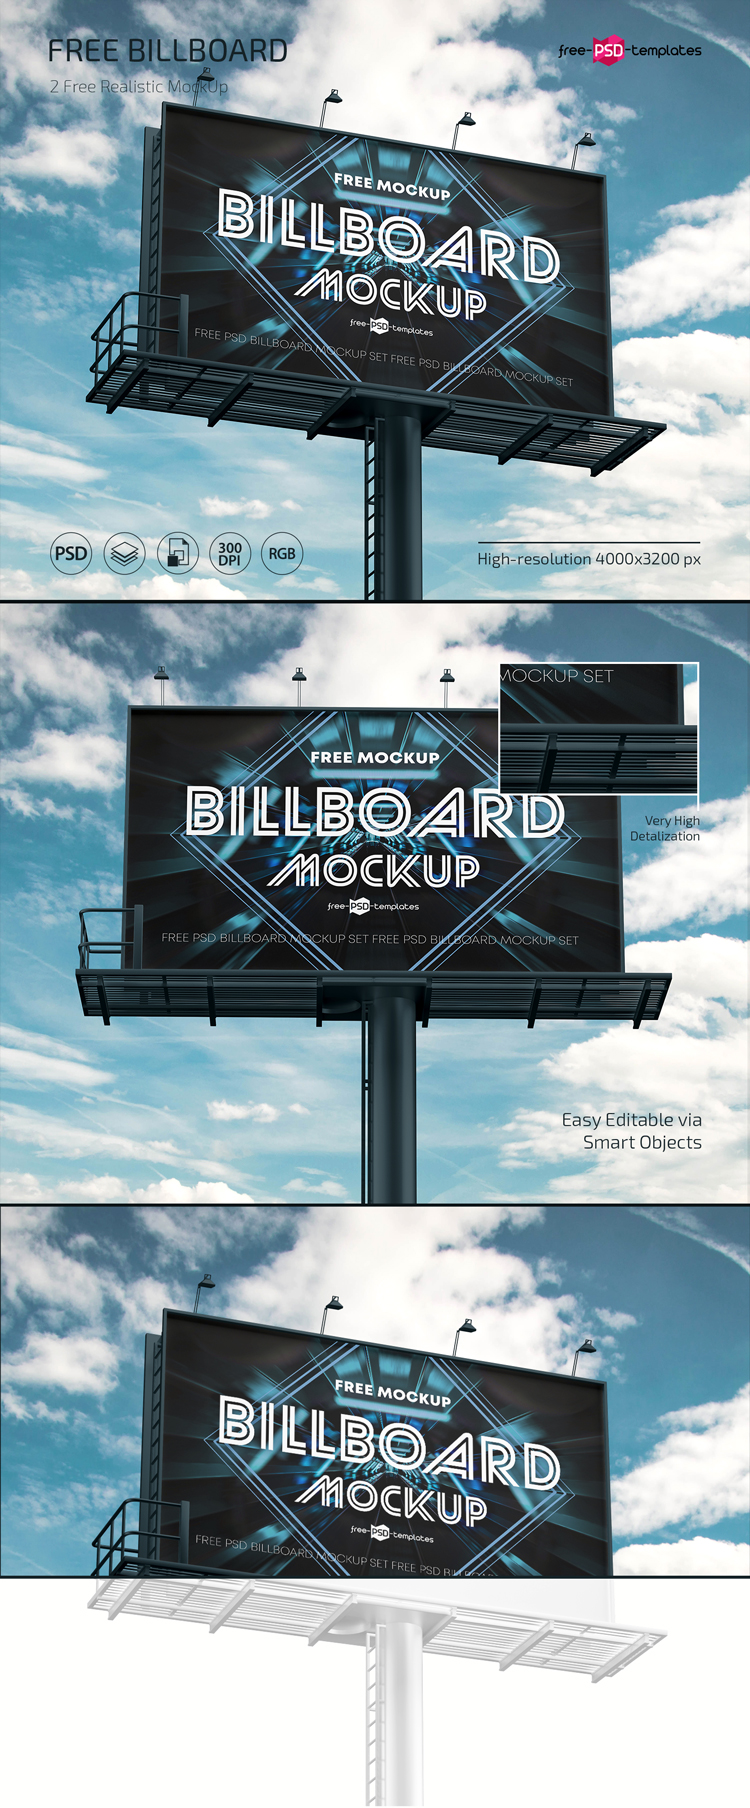 Download Free Billboard Ad Mockups in PSD | Free PSD Templates